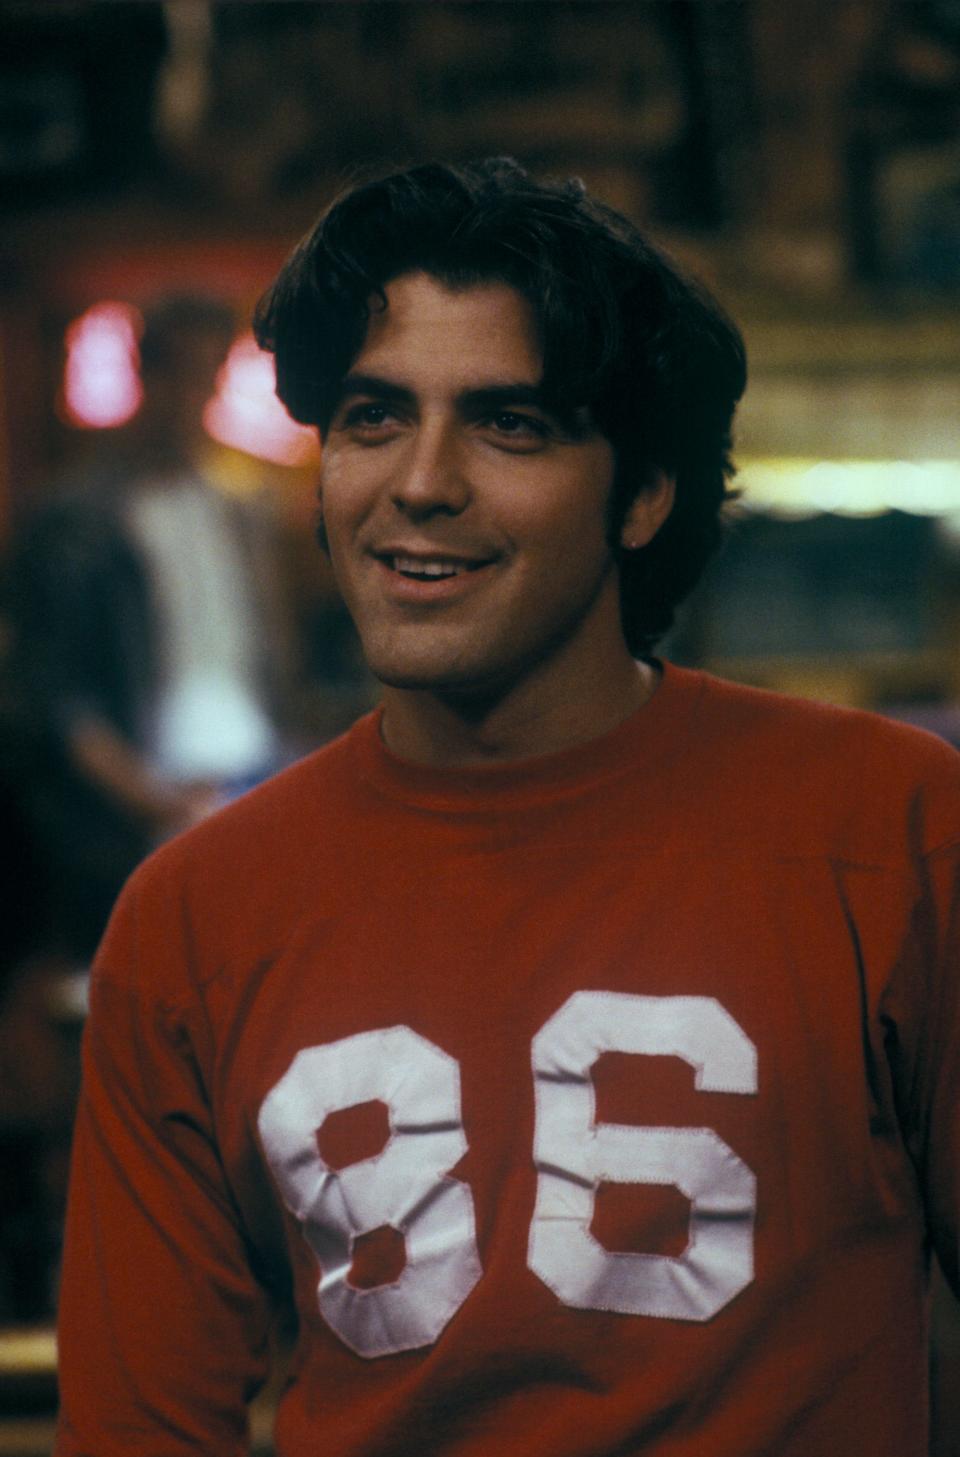 George Clooney as Booker Brooks in "Roseanne"